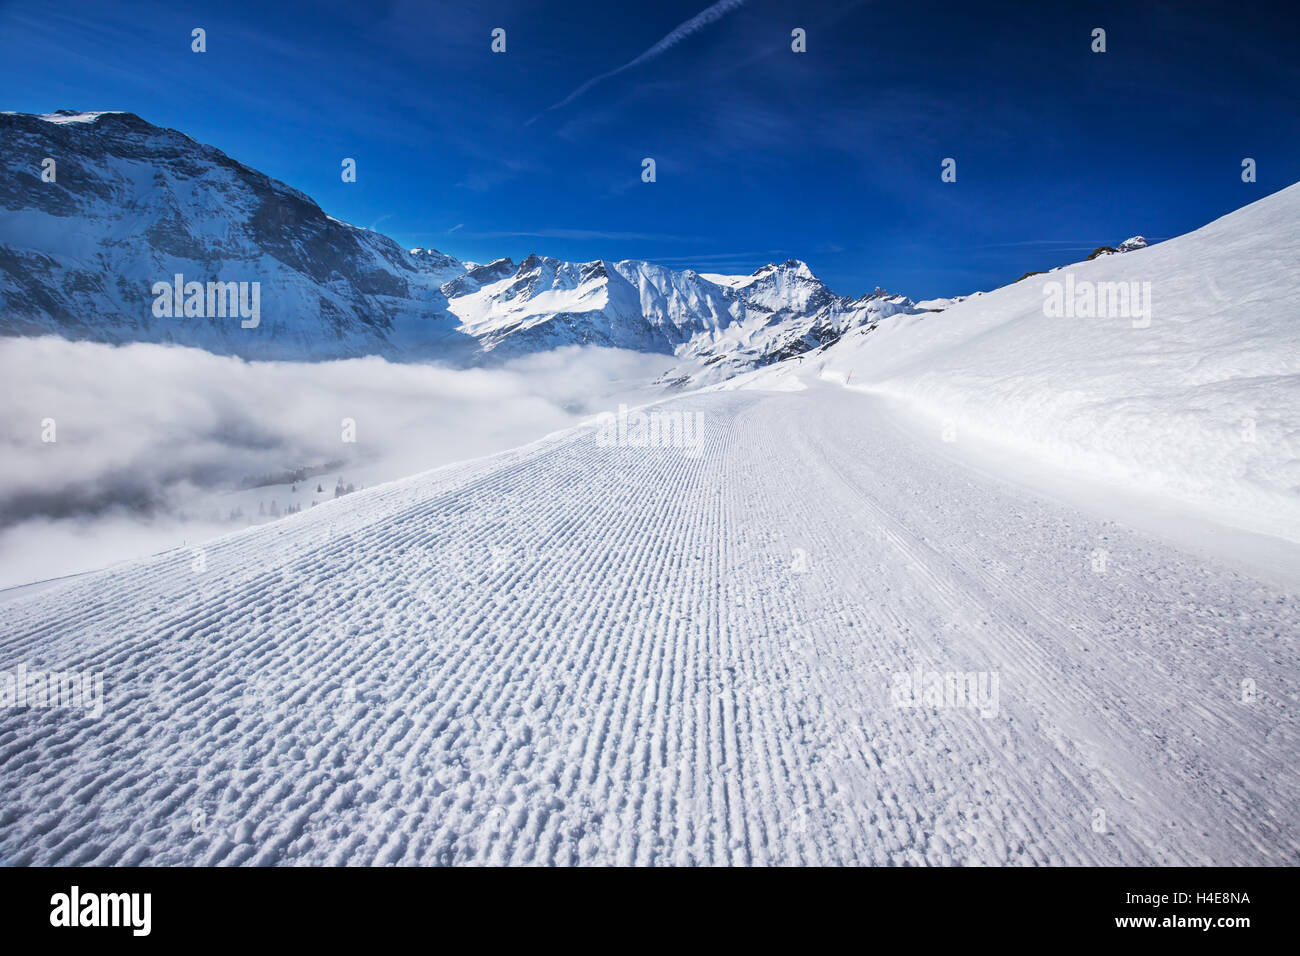 View to Ski slopes with the corduroy pattern in Elm ski resort, Swiss Alps, Switzerland Stock Photo